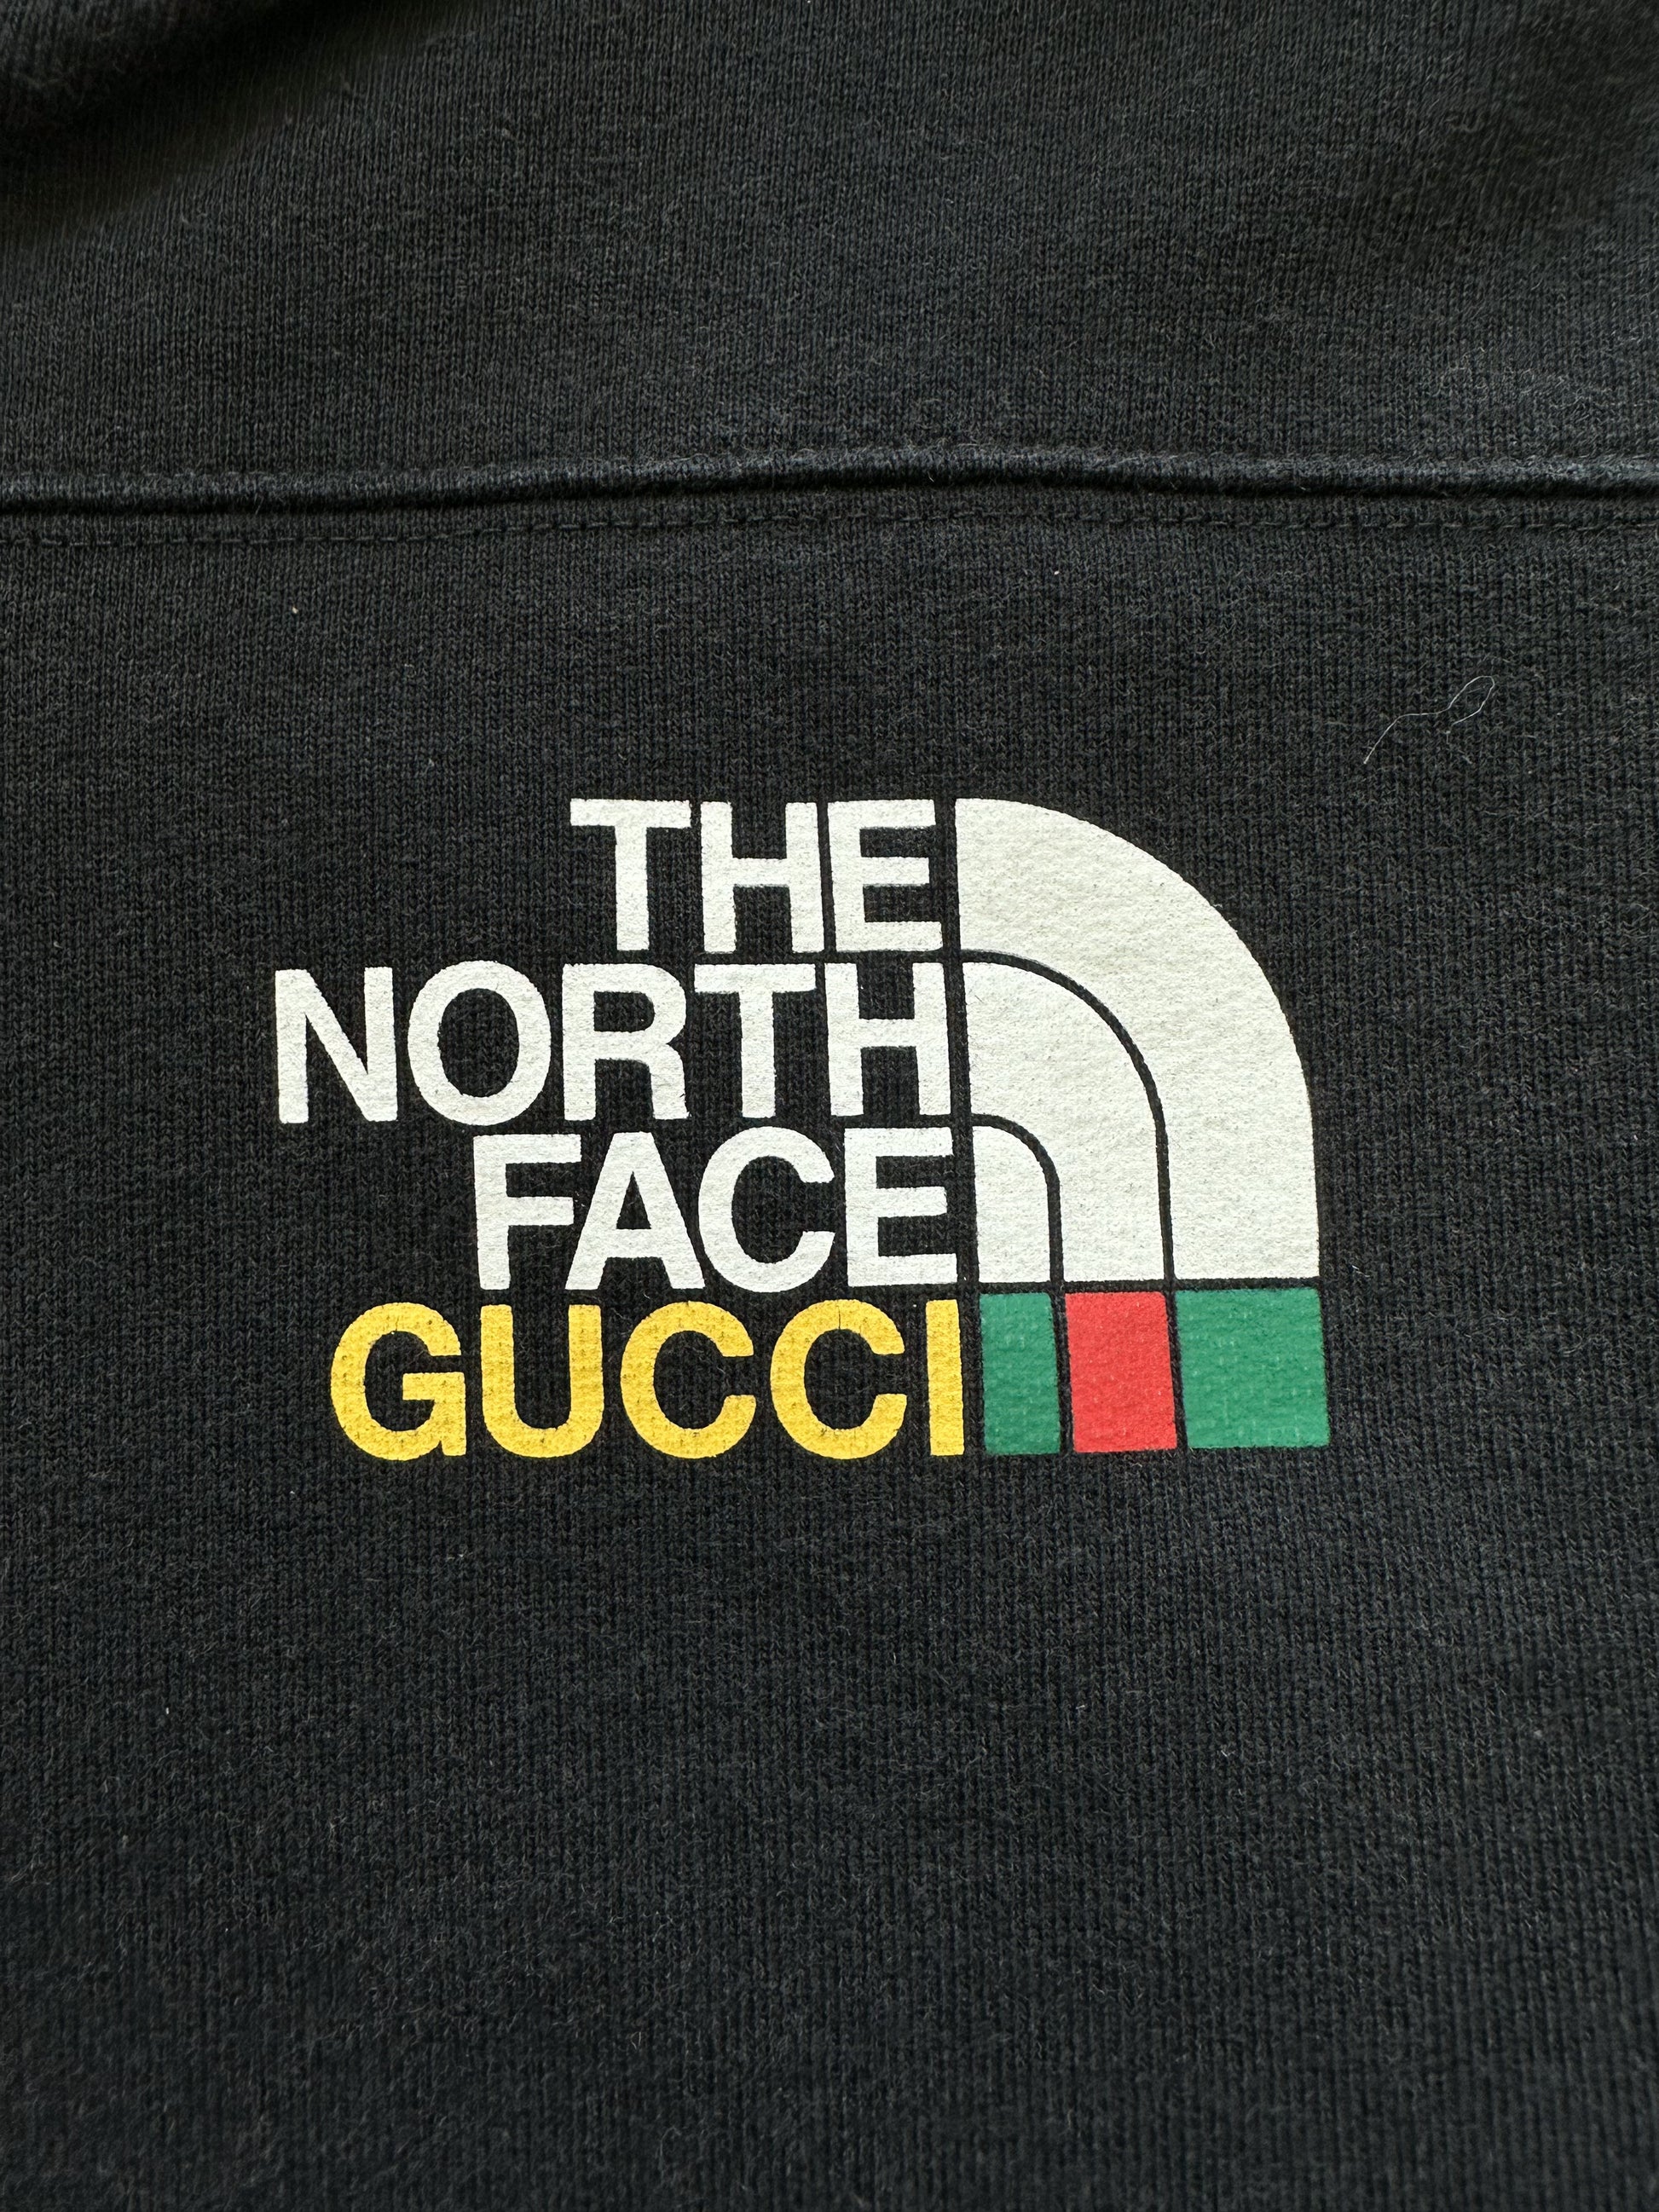 The North Face x Gucci cotton sweatshirt White  White sweatshirt, Cotton  sweatshirts, Sweatshirts